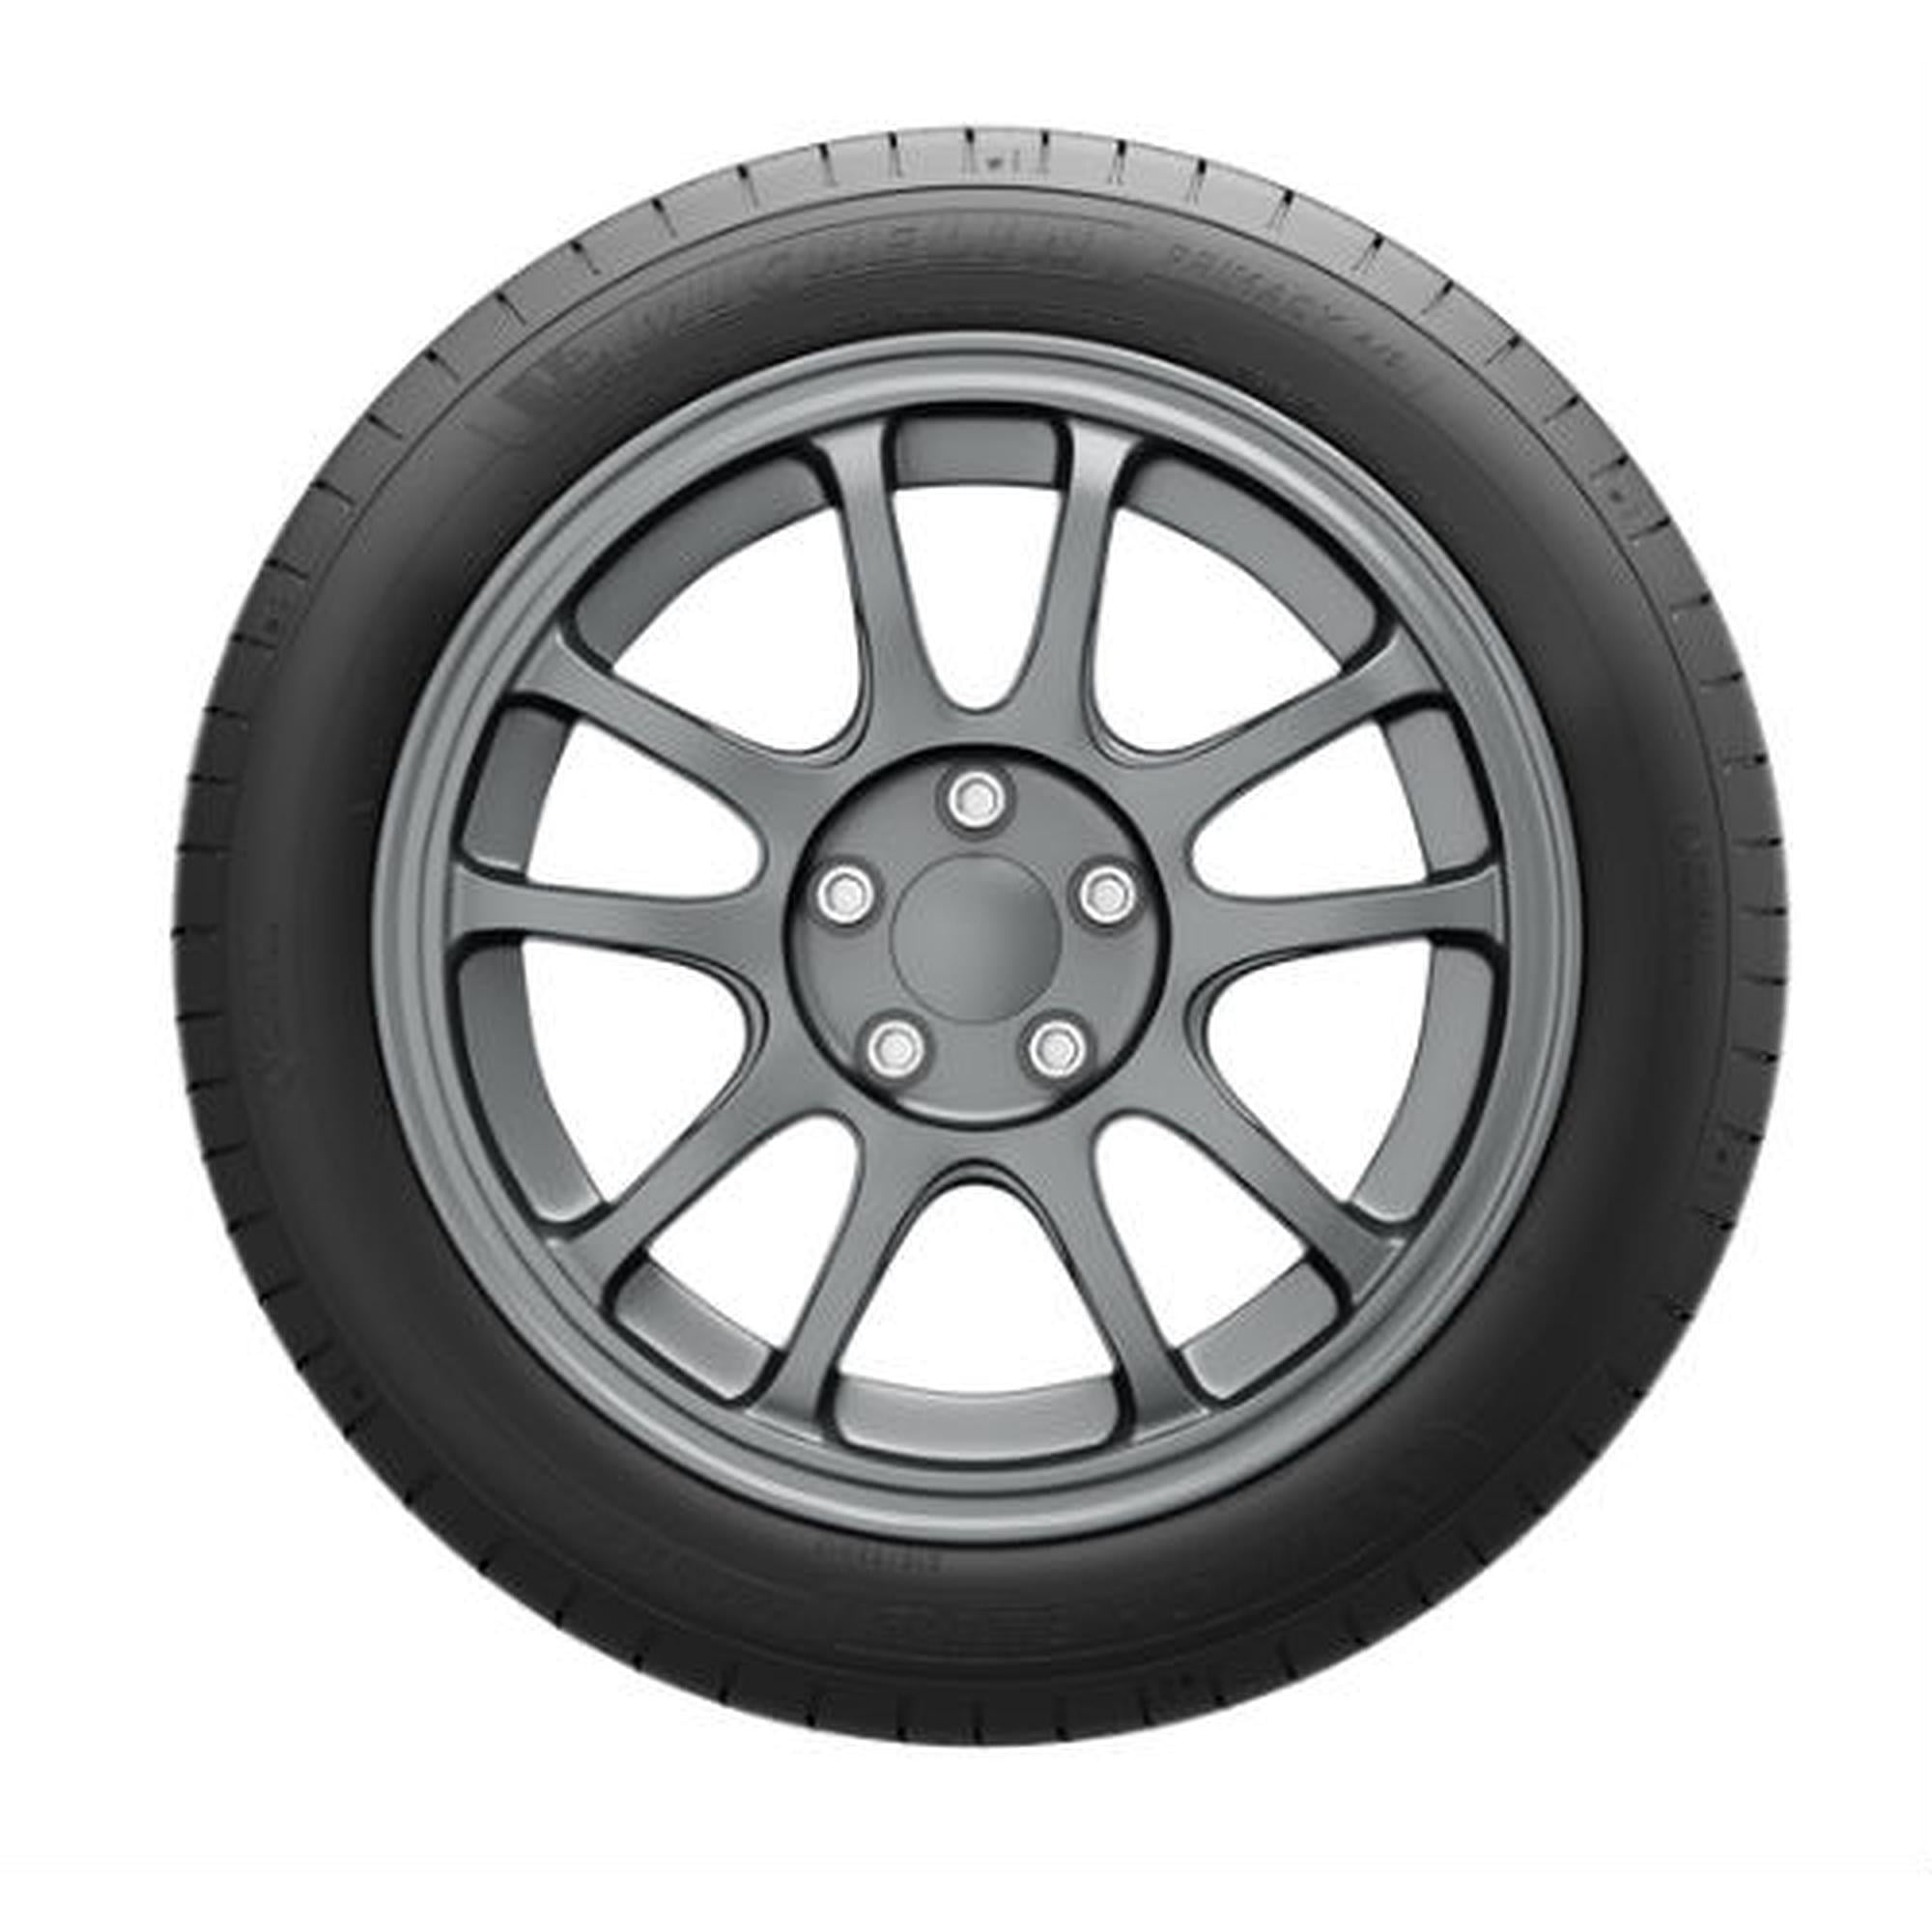 Michelin Primacy A/S All Season 235/55R19 101V Passenger Tire